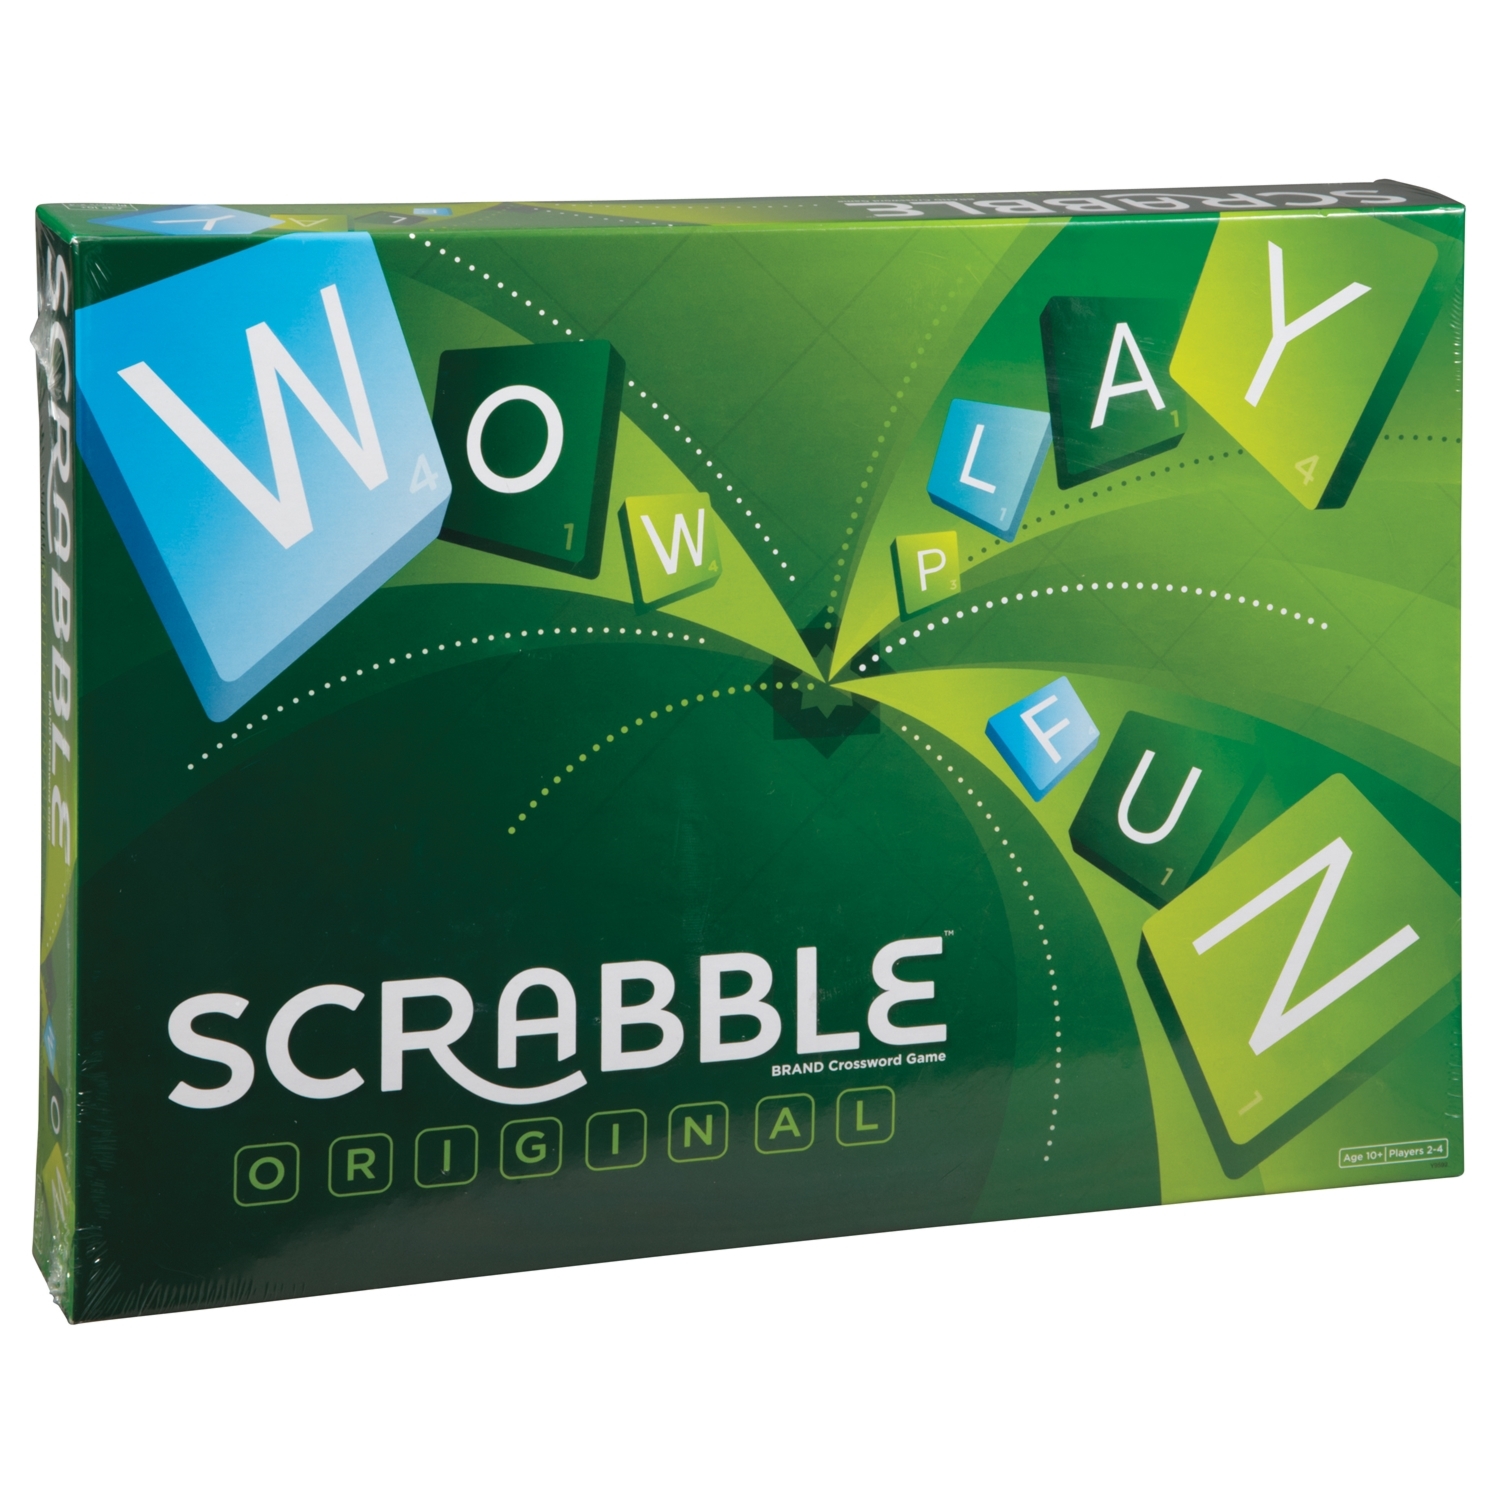 Mattle Scrabble Original Board Game Image 2